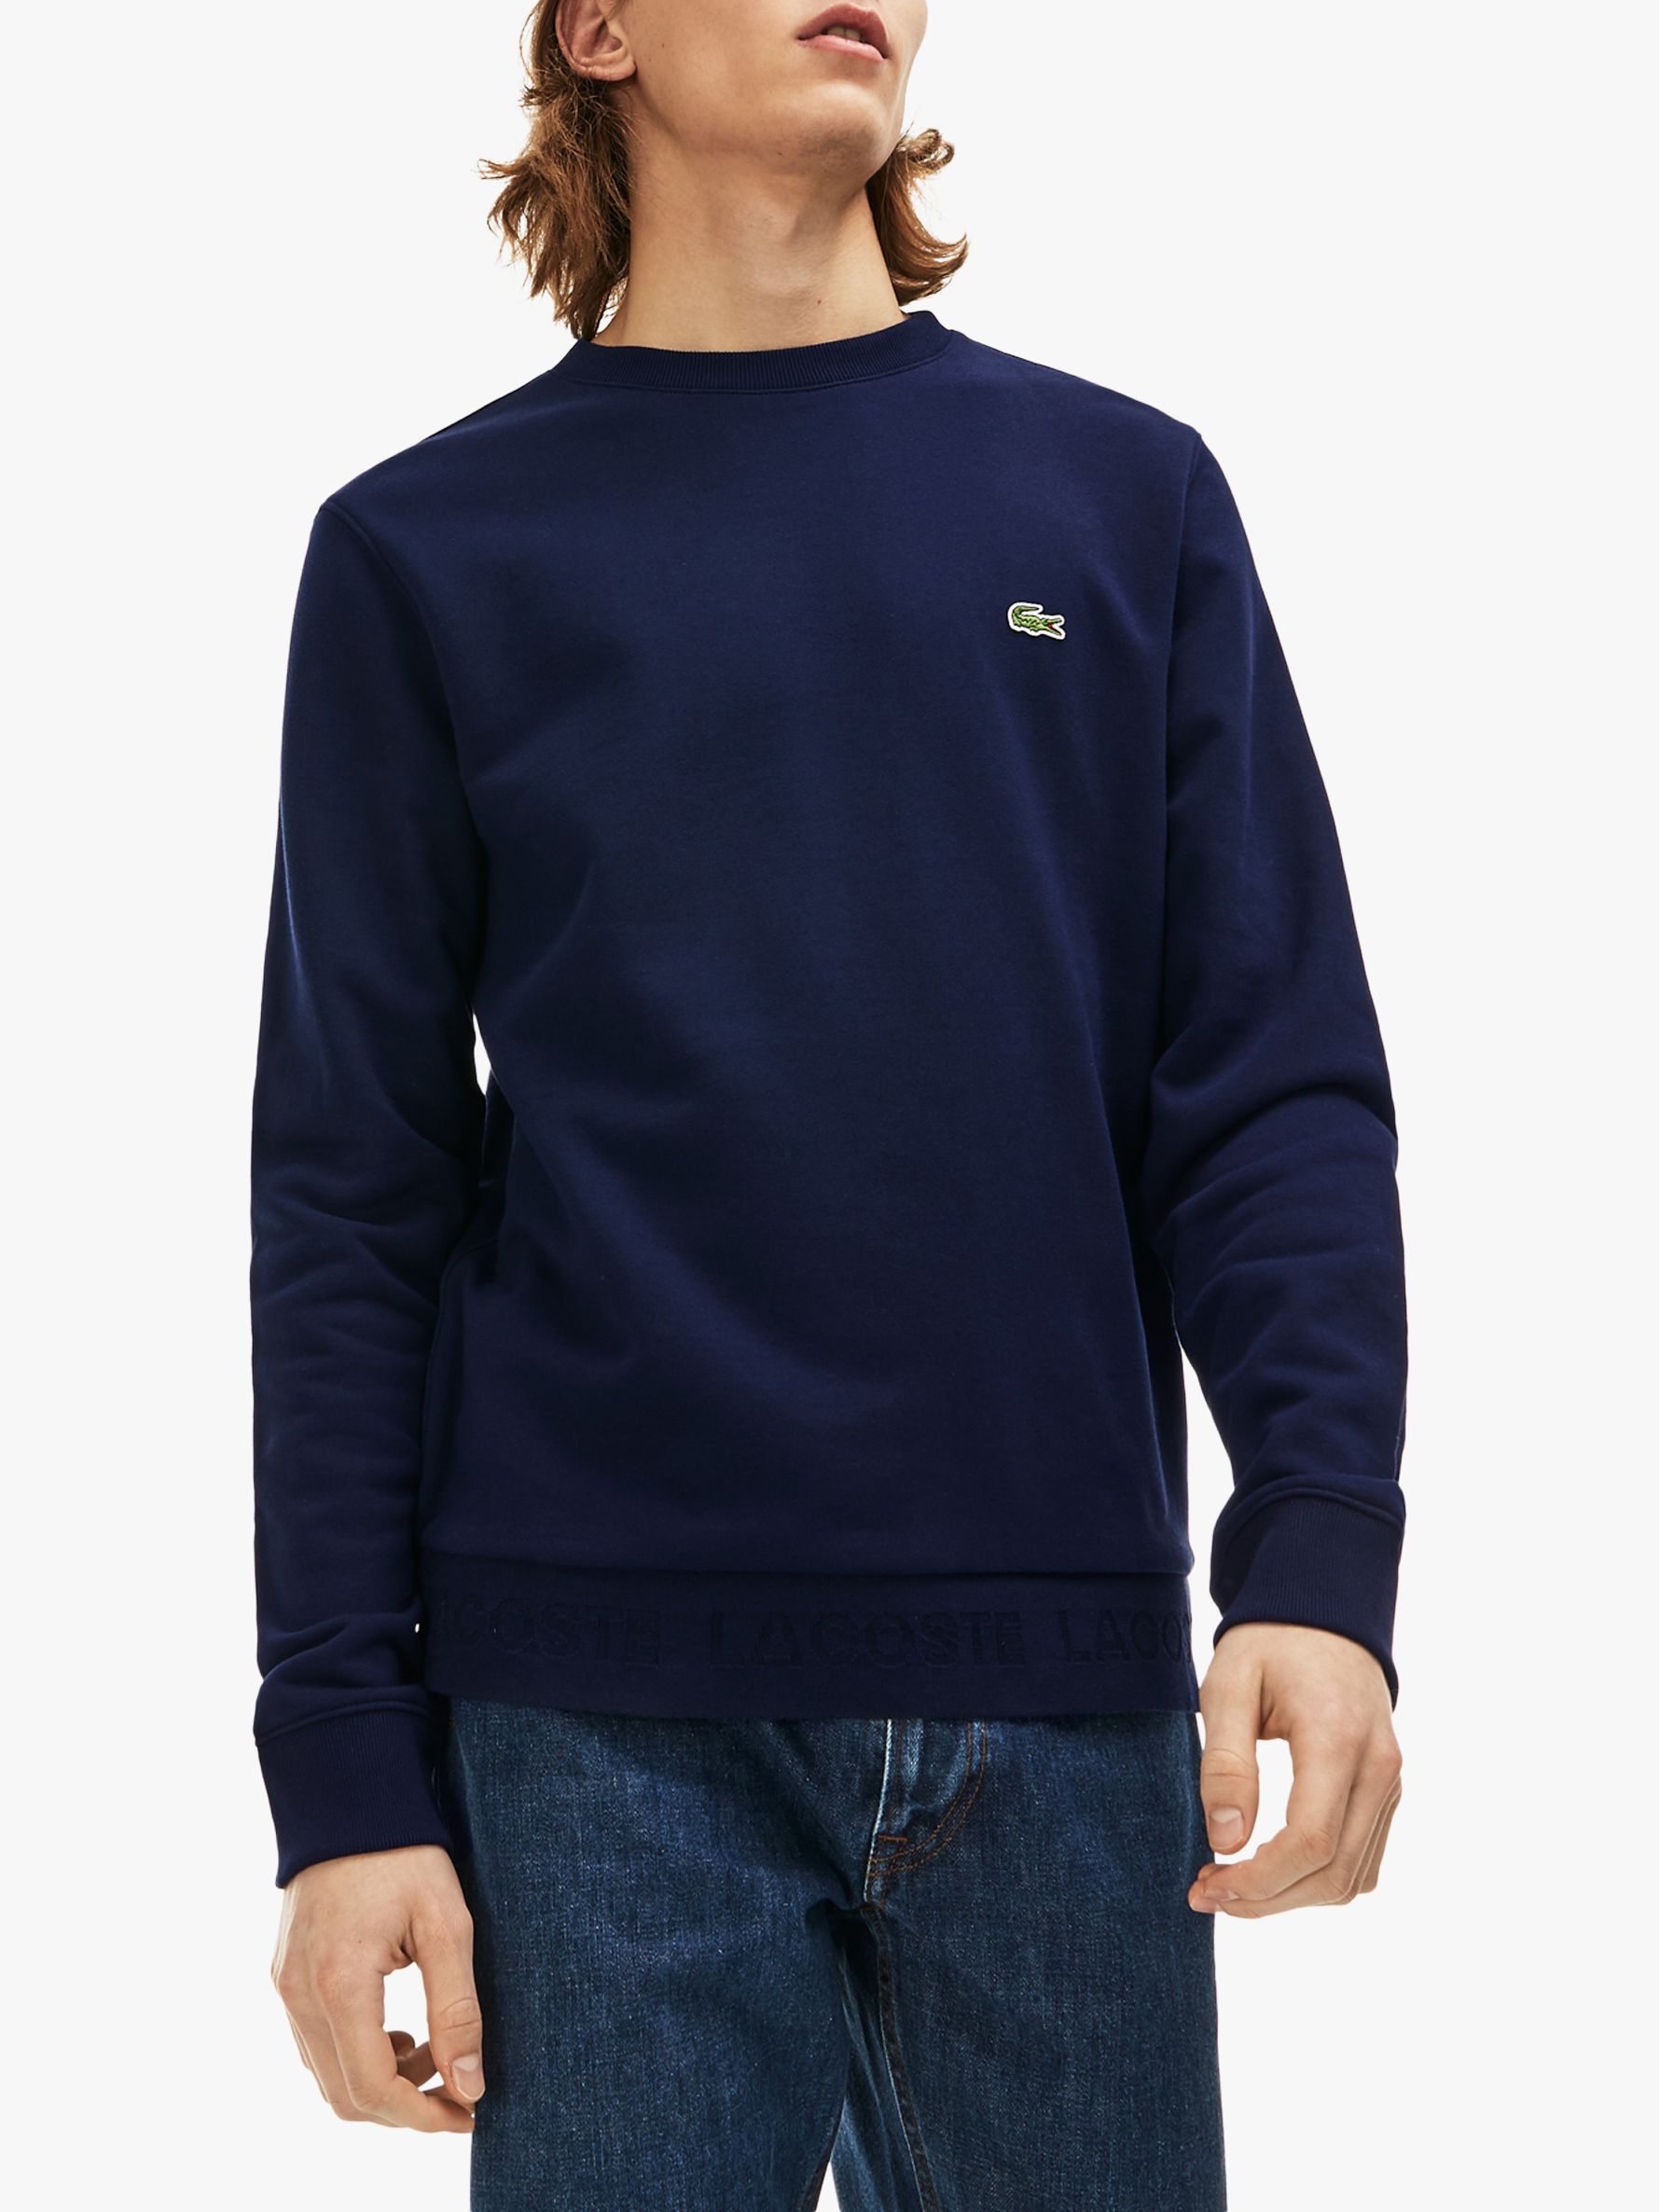 navy blue lacoste sweatshirt